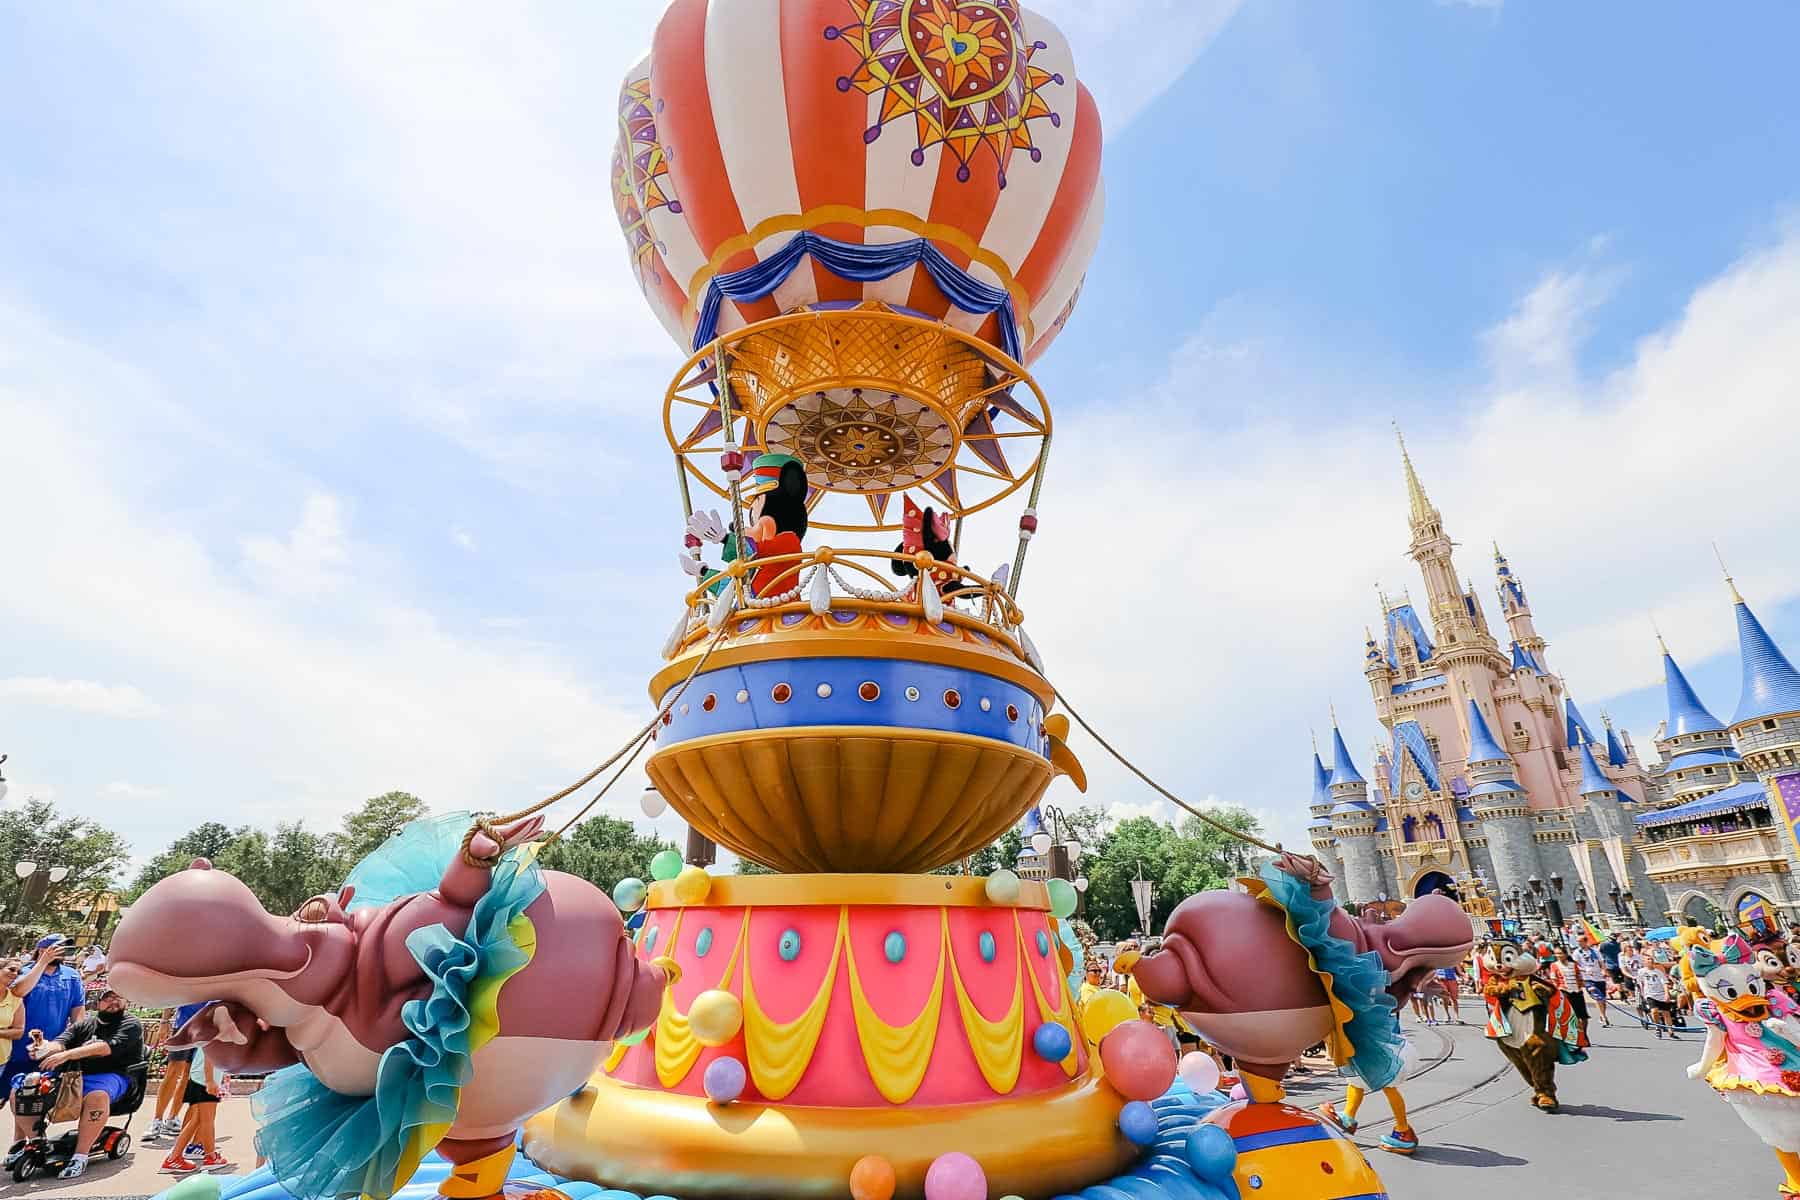 Mickey's Airship in the Festival of Fantasy Parade.